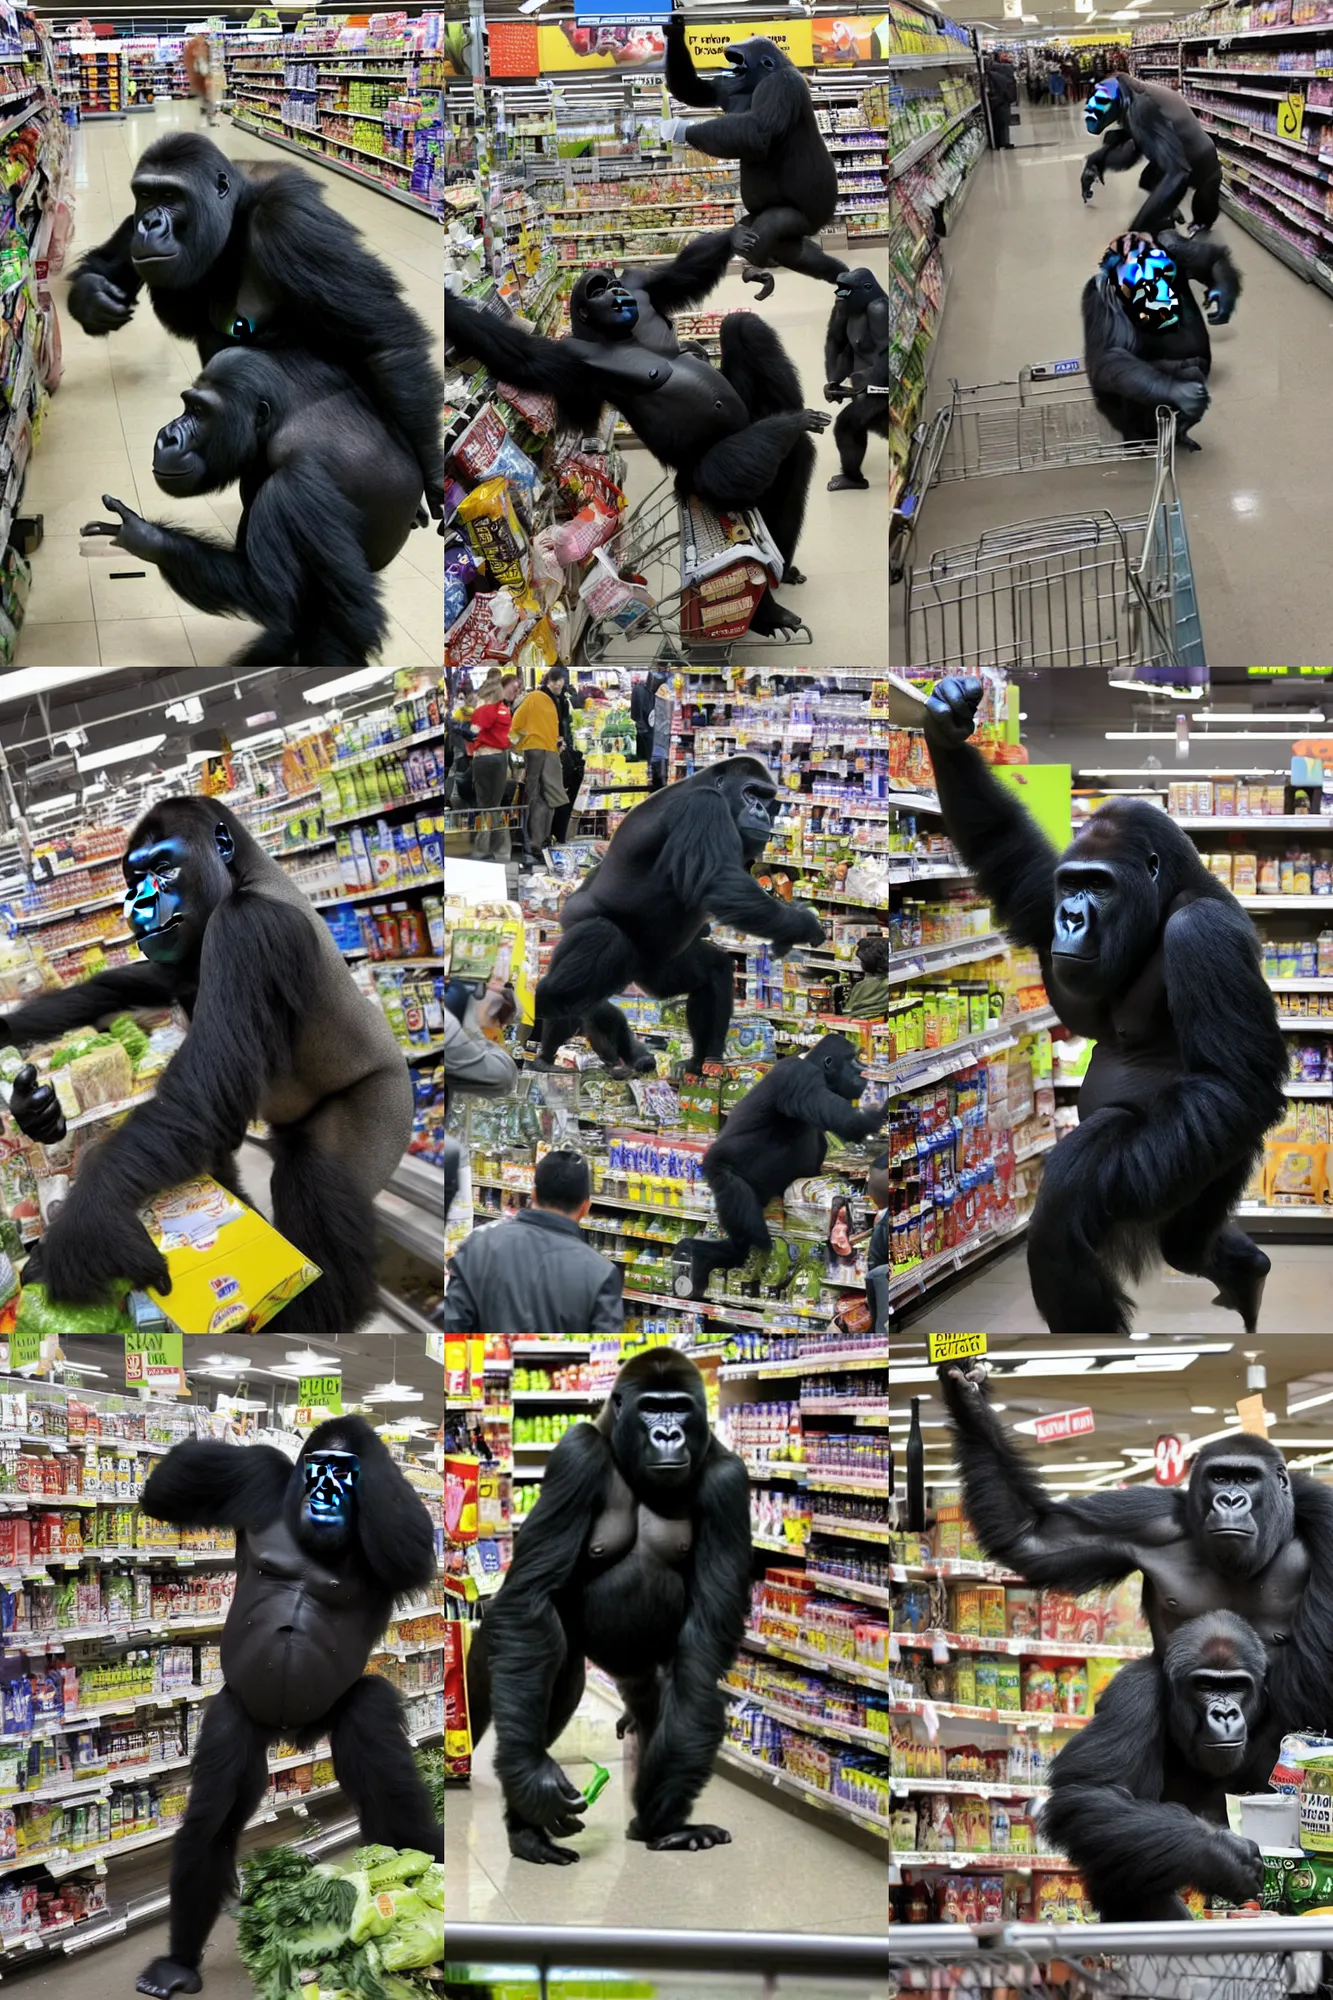 Prompt: a gorilla wreaking havoc in a supermarket, chaos, destruction, panic